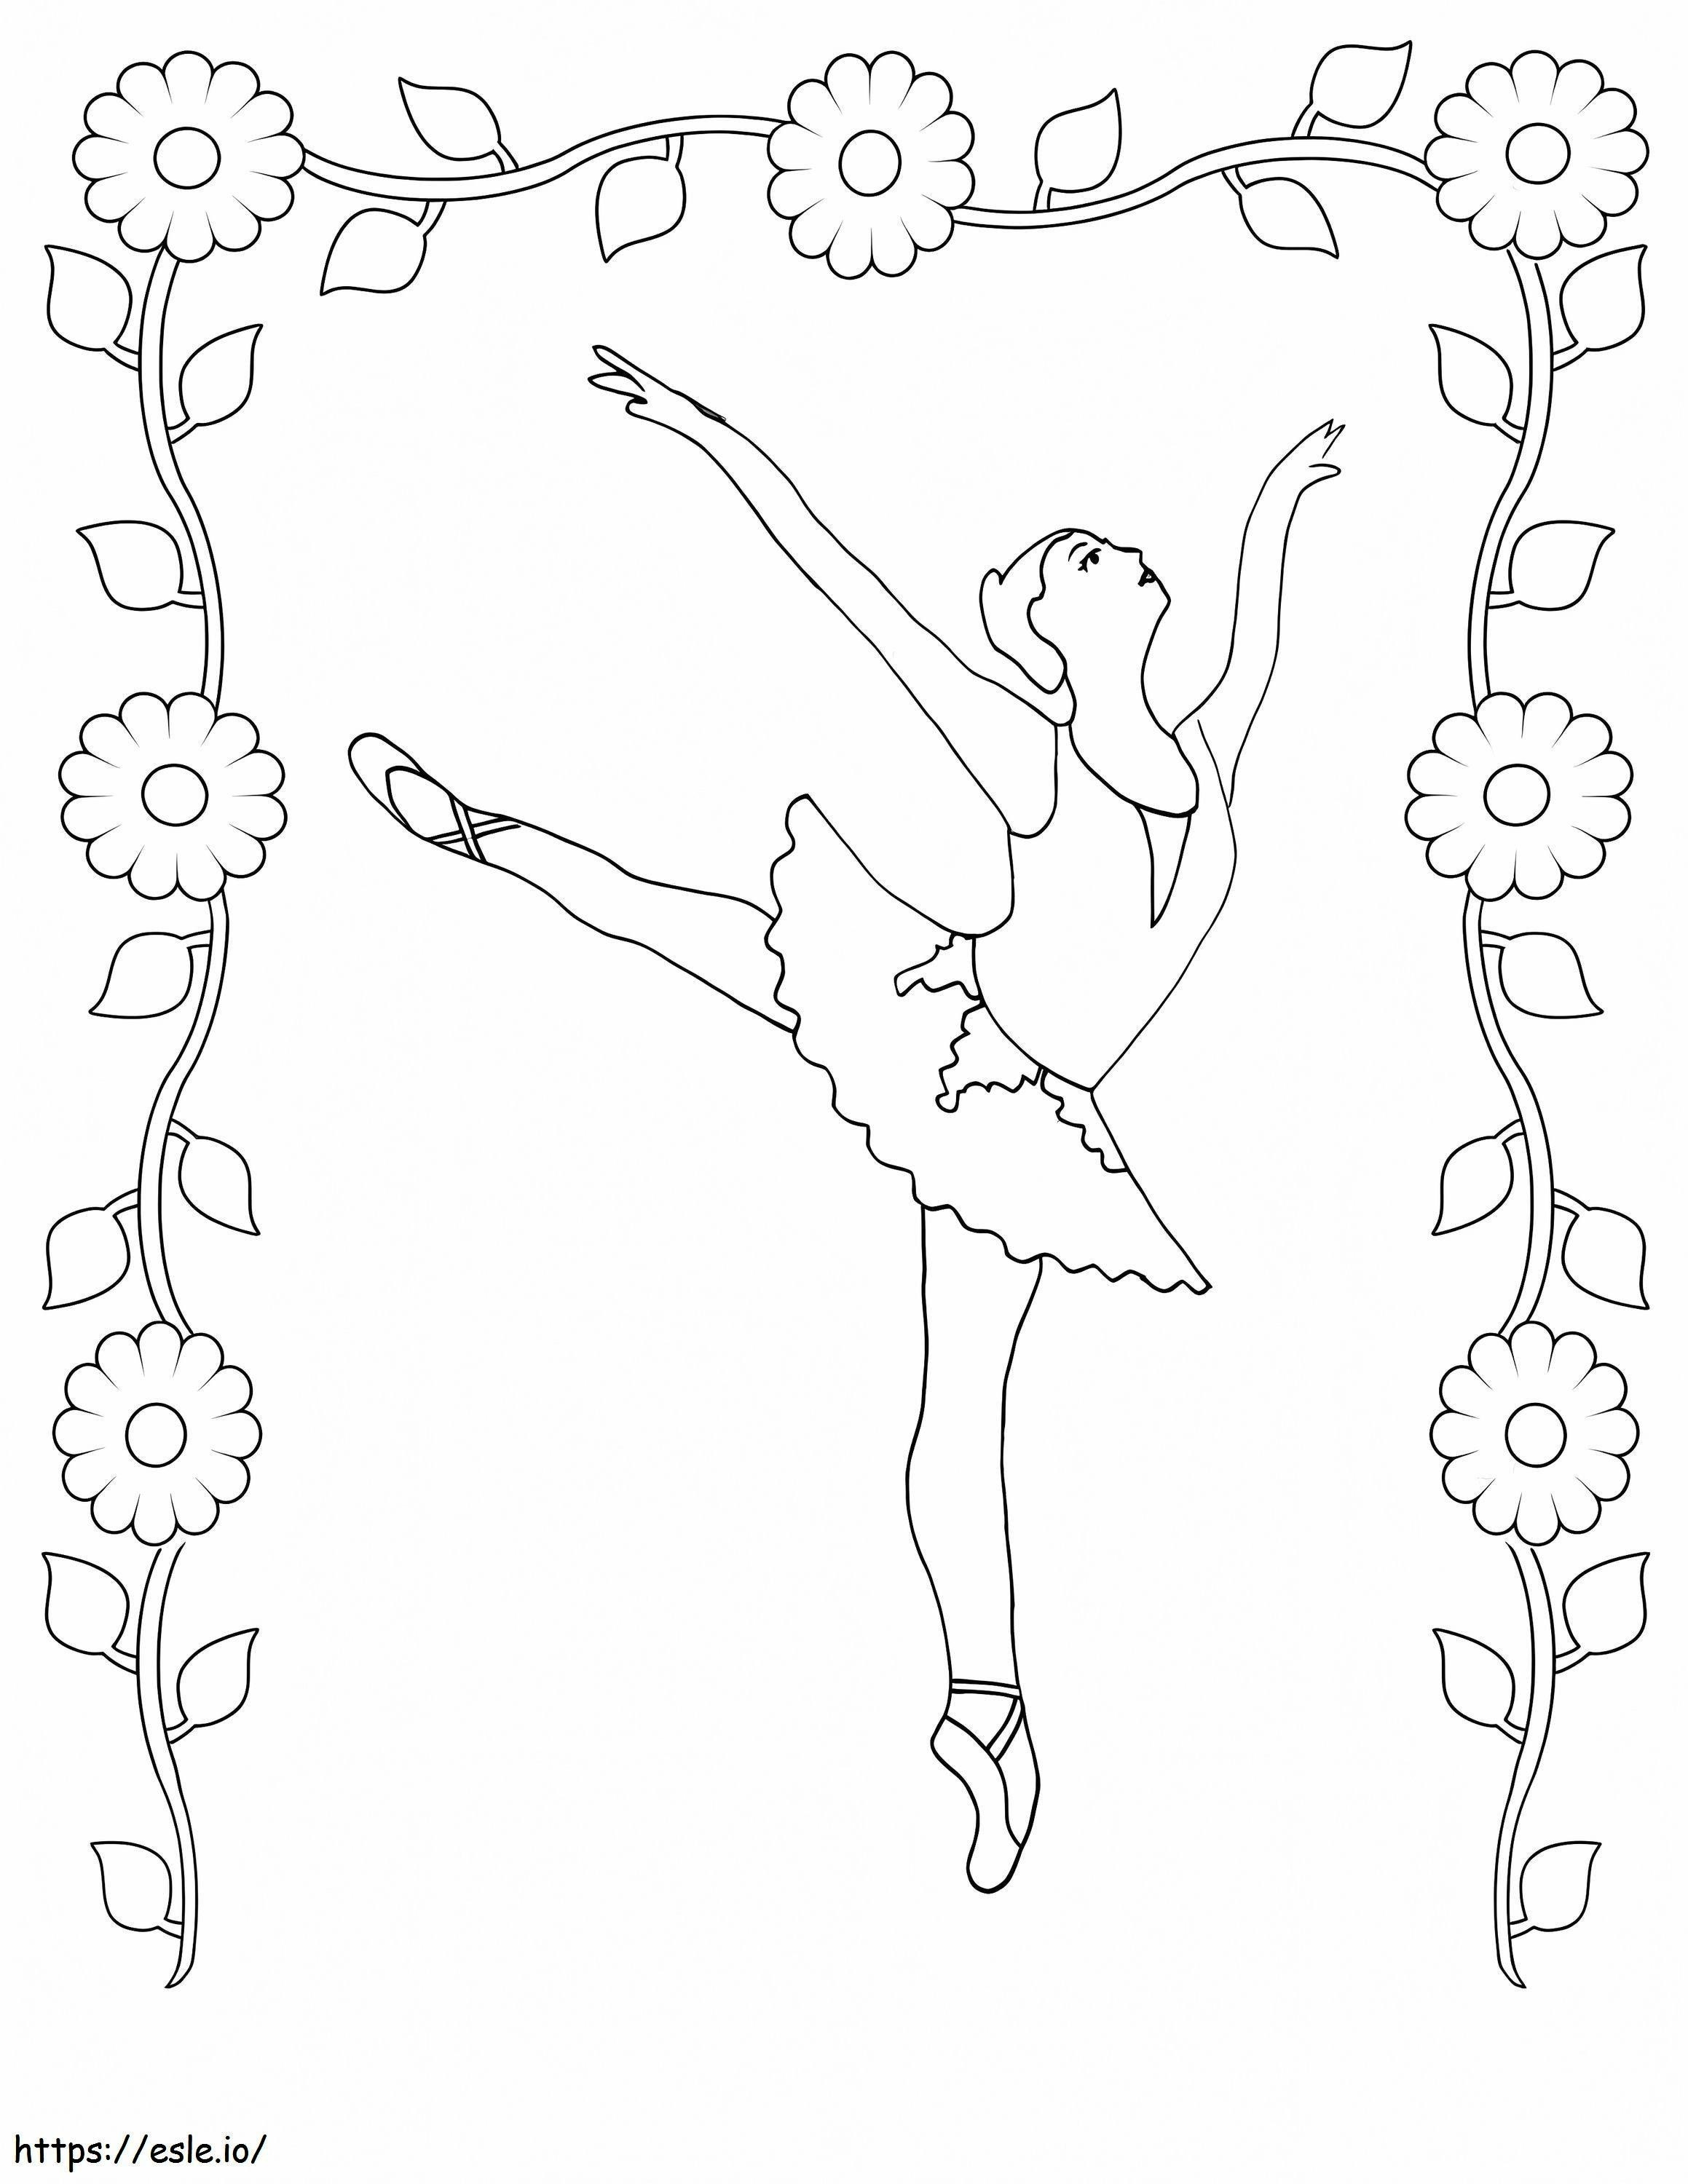 Ballet Dancer coloring page